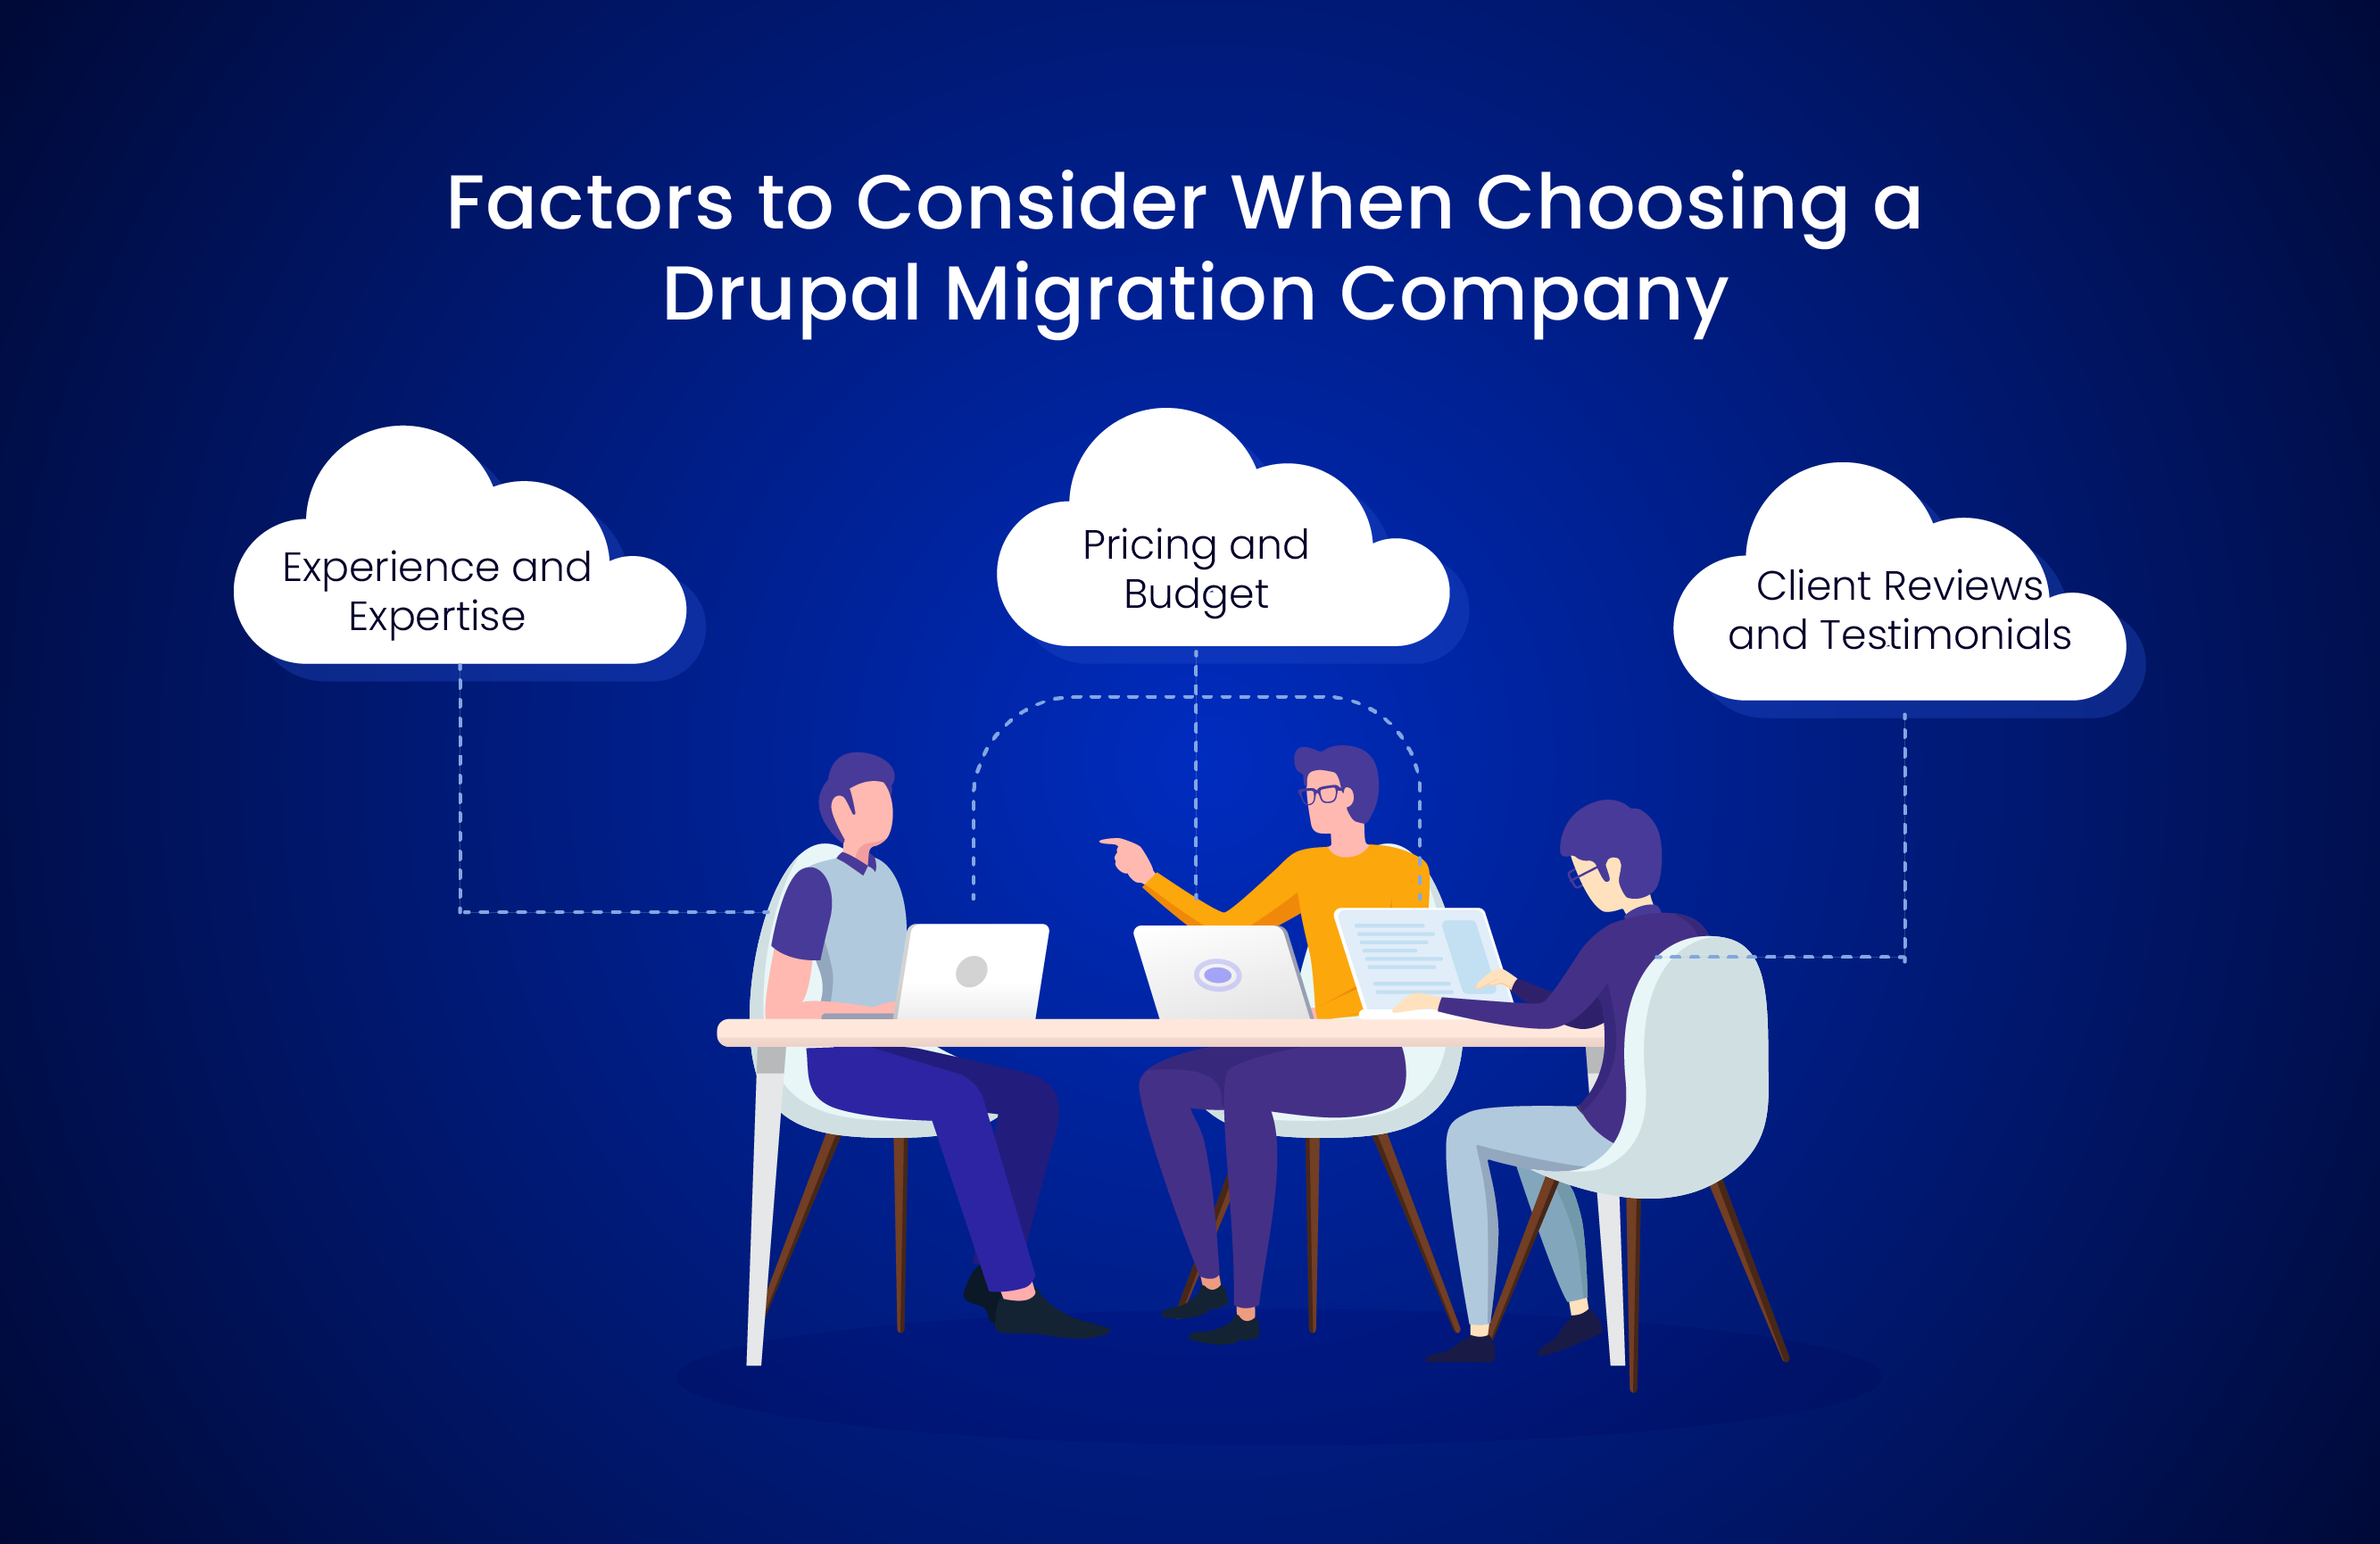 Drupal Migration company